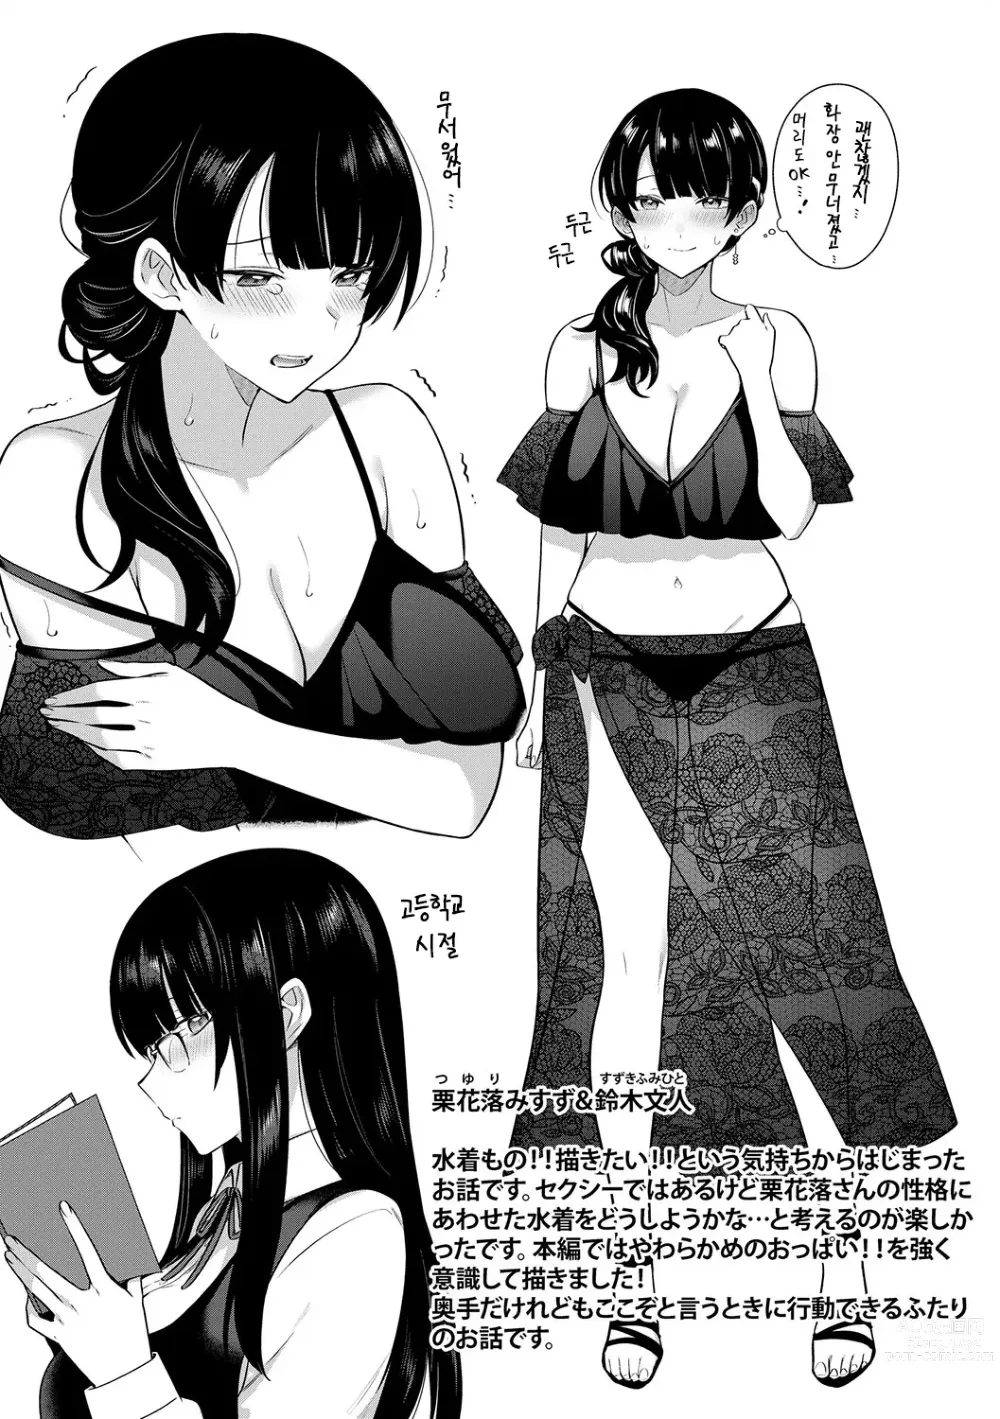 Page 240 of manga Tsubomi Zakari + Digital Tokusouban Gentai Tokuten Character Settei Shuu & Raugh Shuu